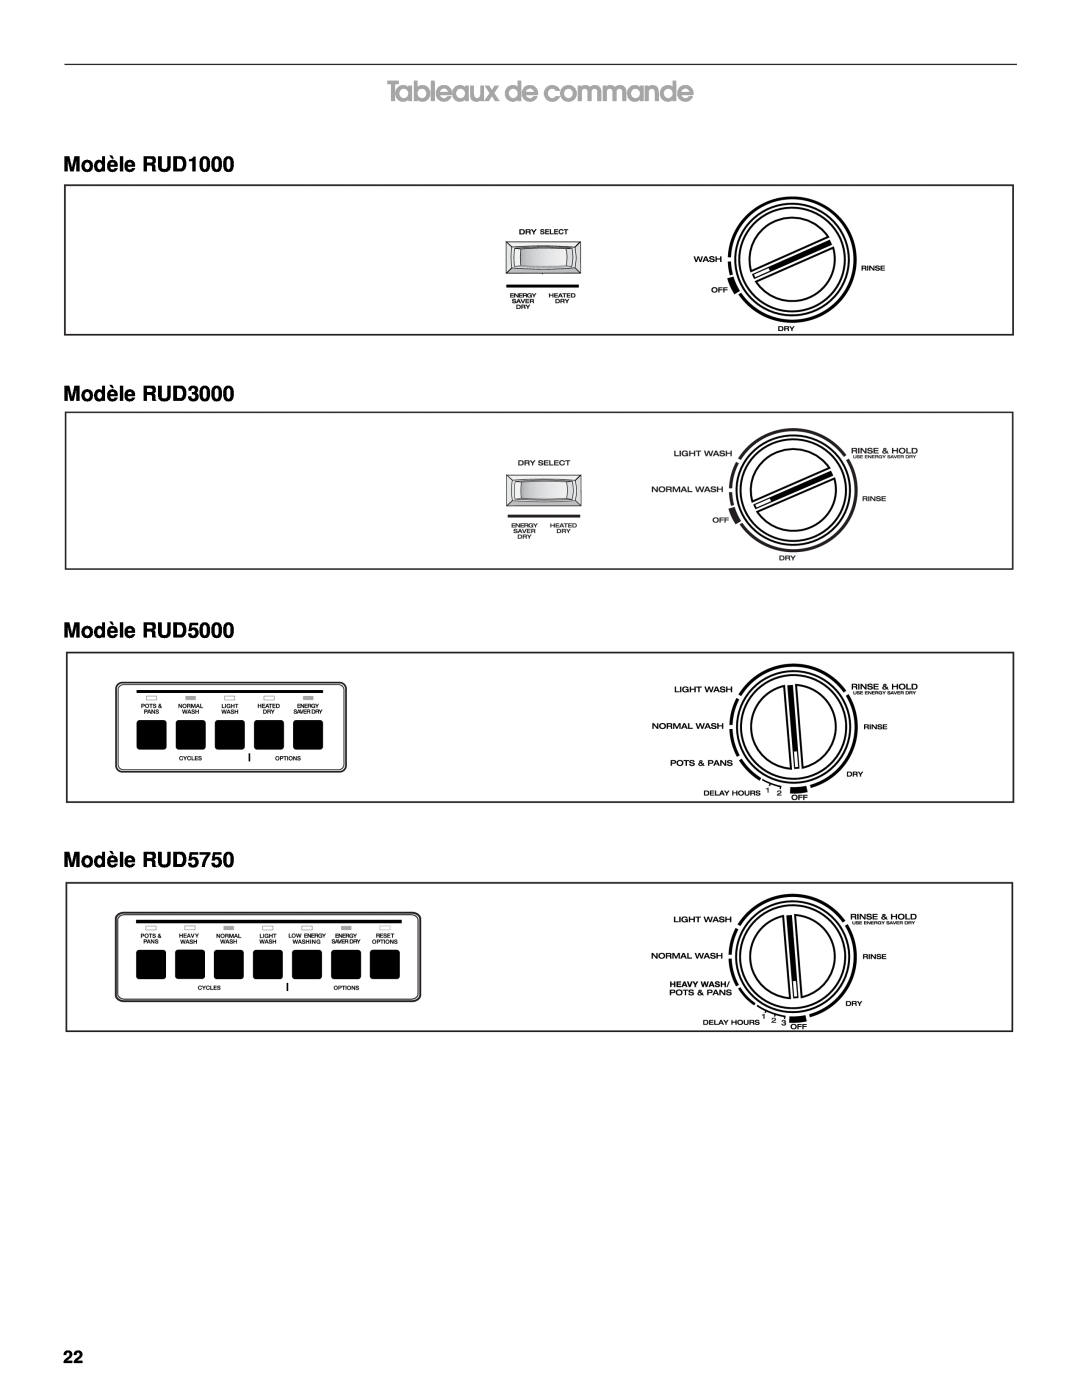 Roper Dishwasher, 119 manual Tableaux de commande, Modèle RUD1000 Modèle RUD3000 Modèle RUD5000 Modèle RUD5750 